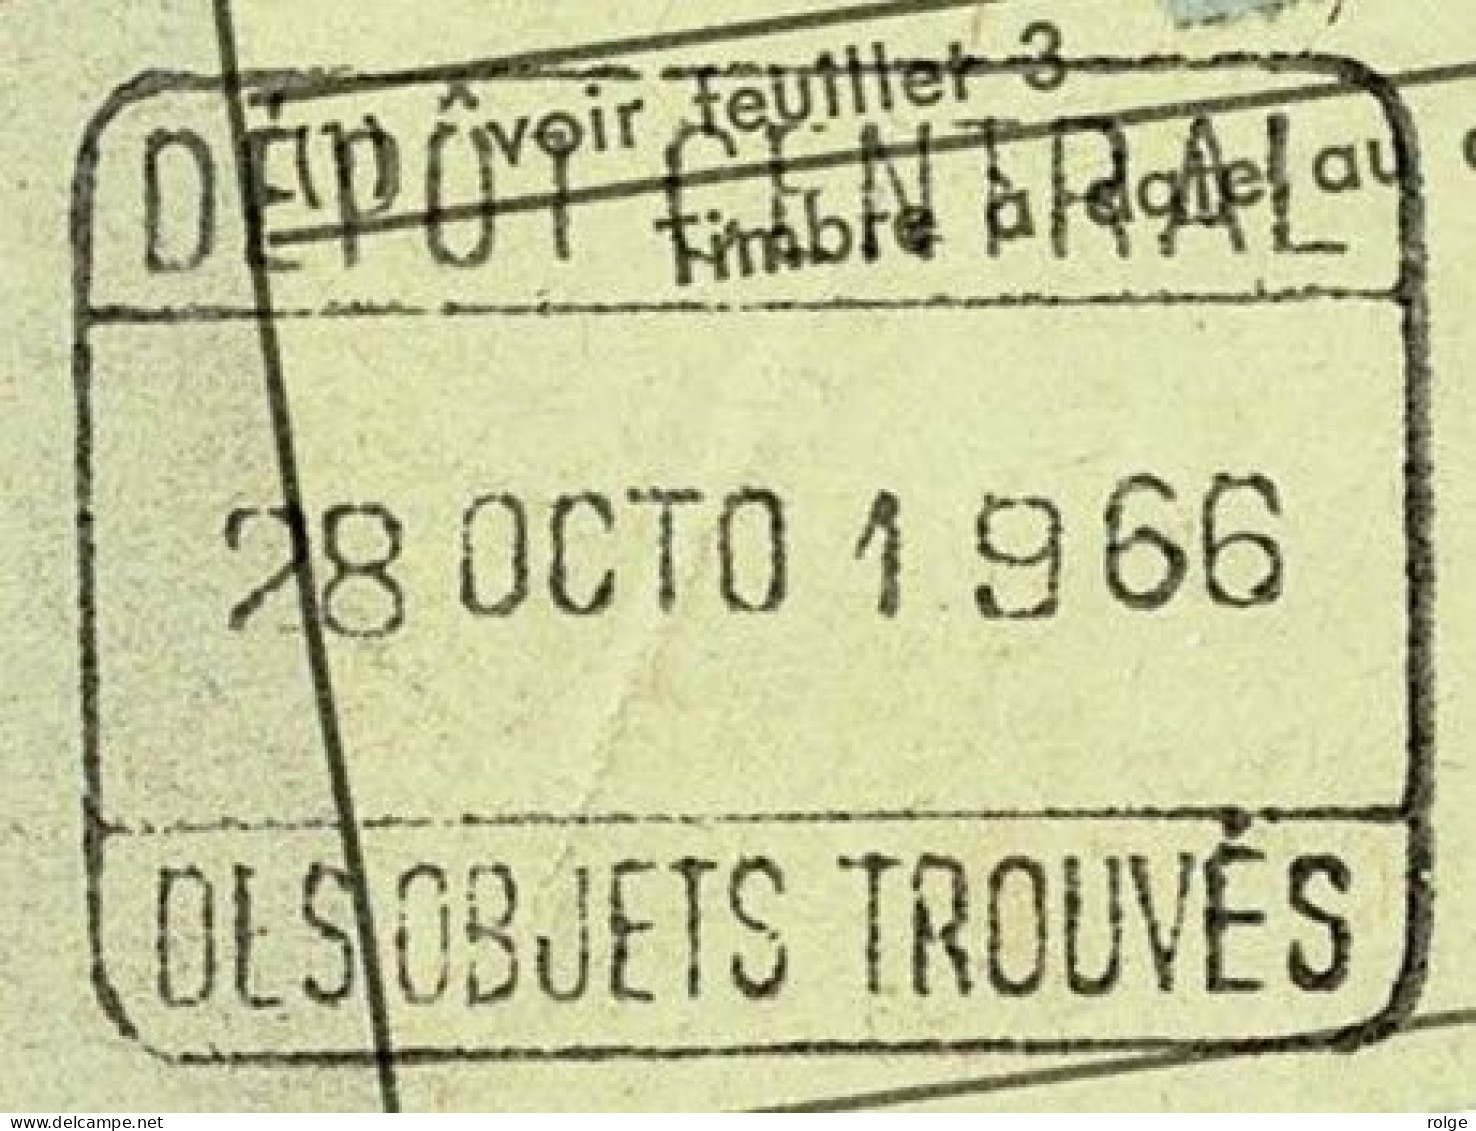 X1001   DEPOT CENTRAL / DES OBJECTS TROUVES      26 JUIL 1966 - Dokumente & Fragmente